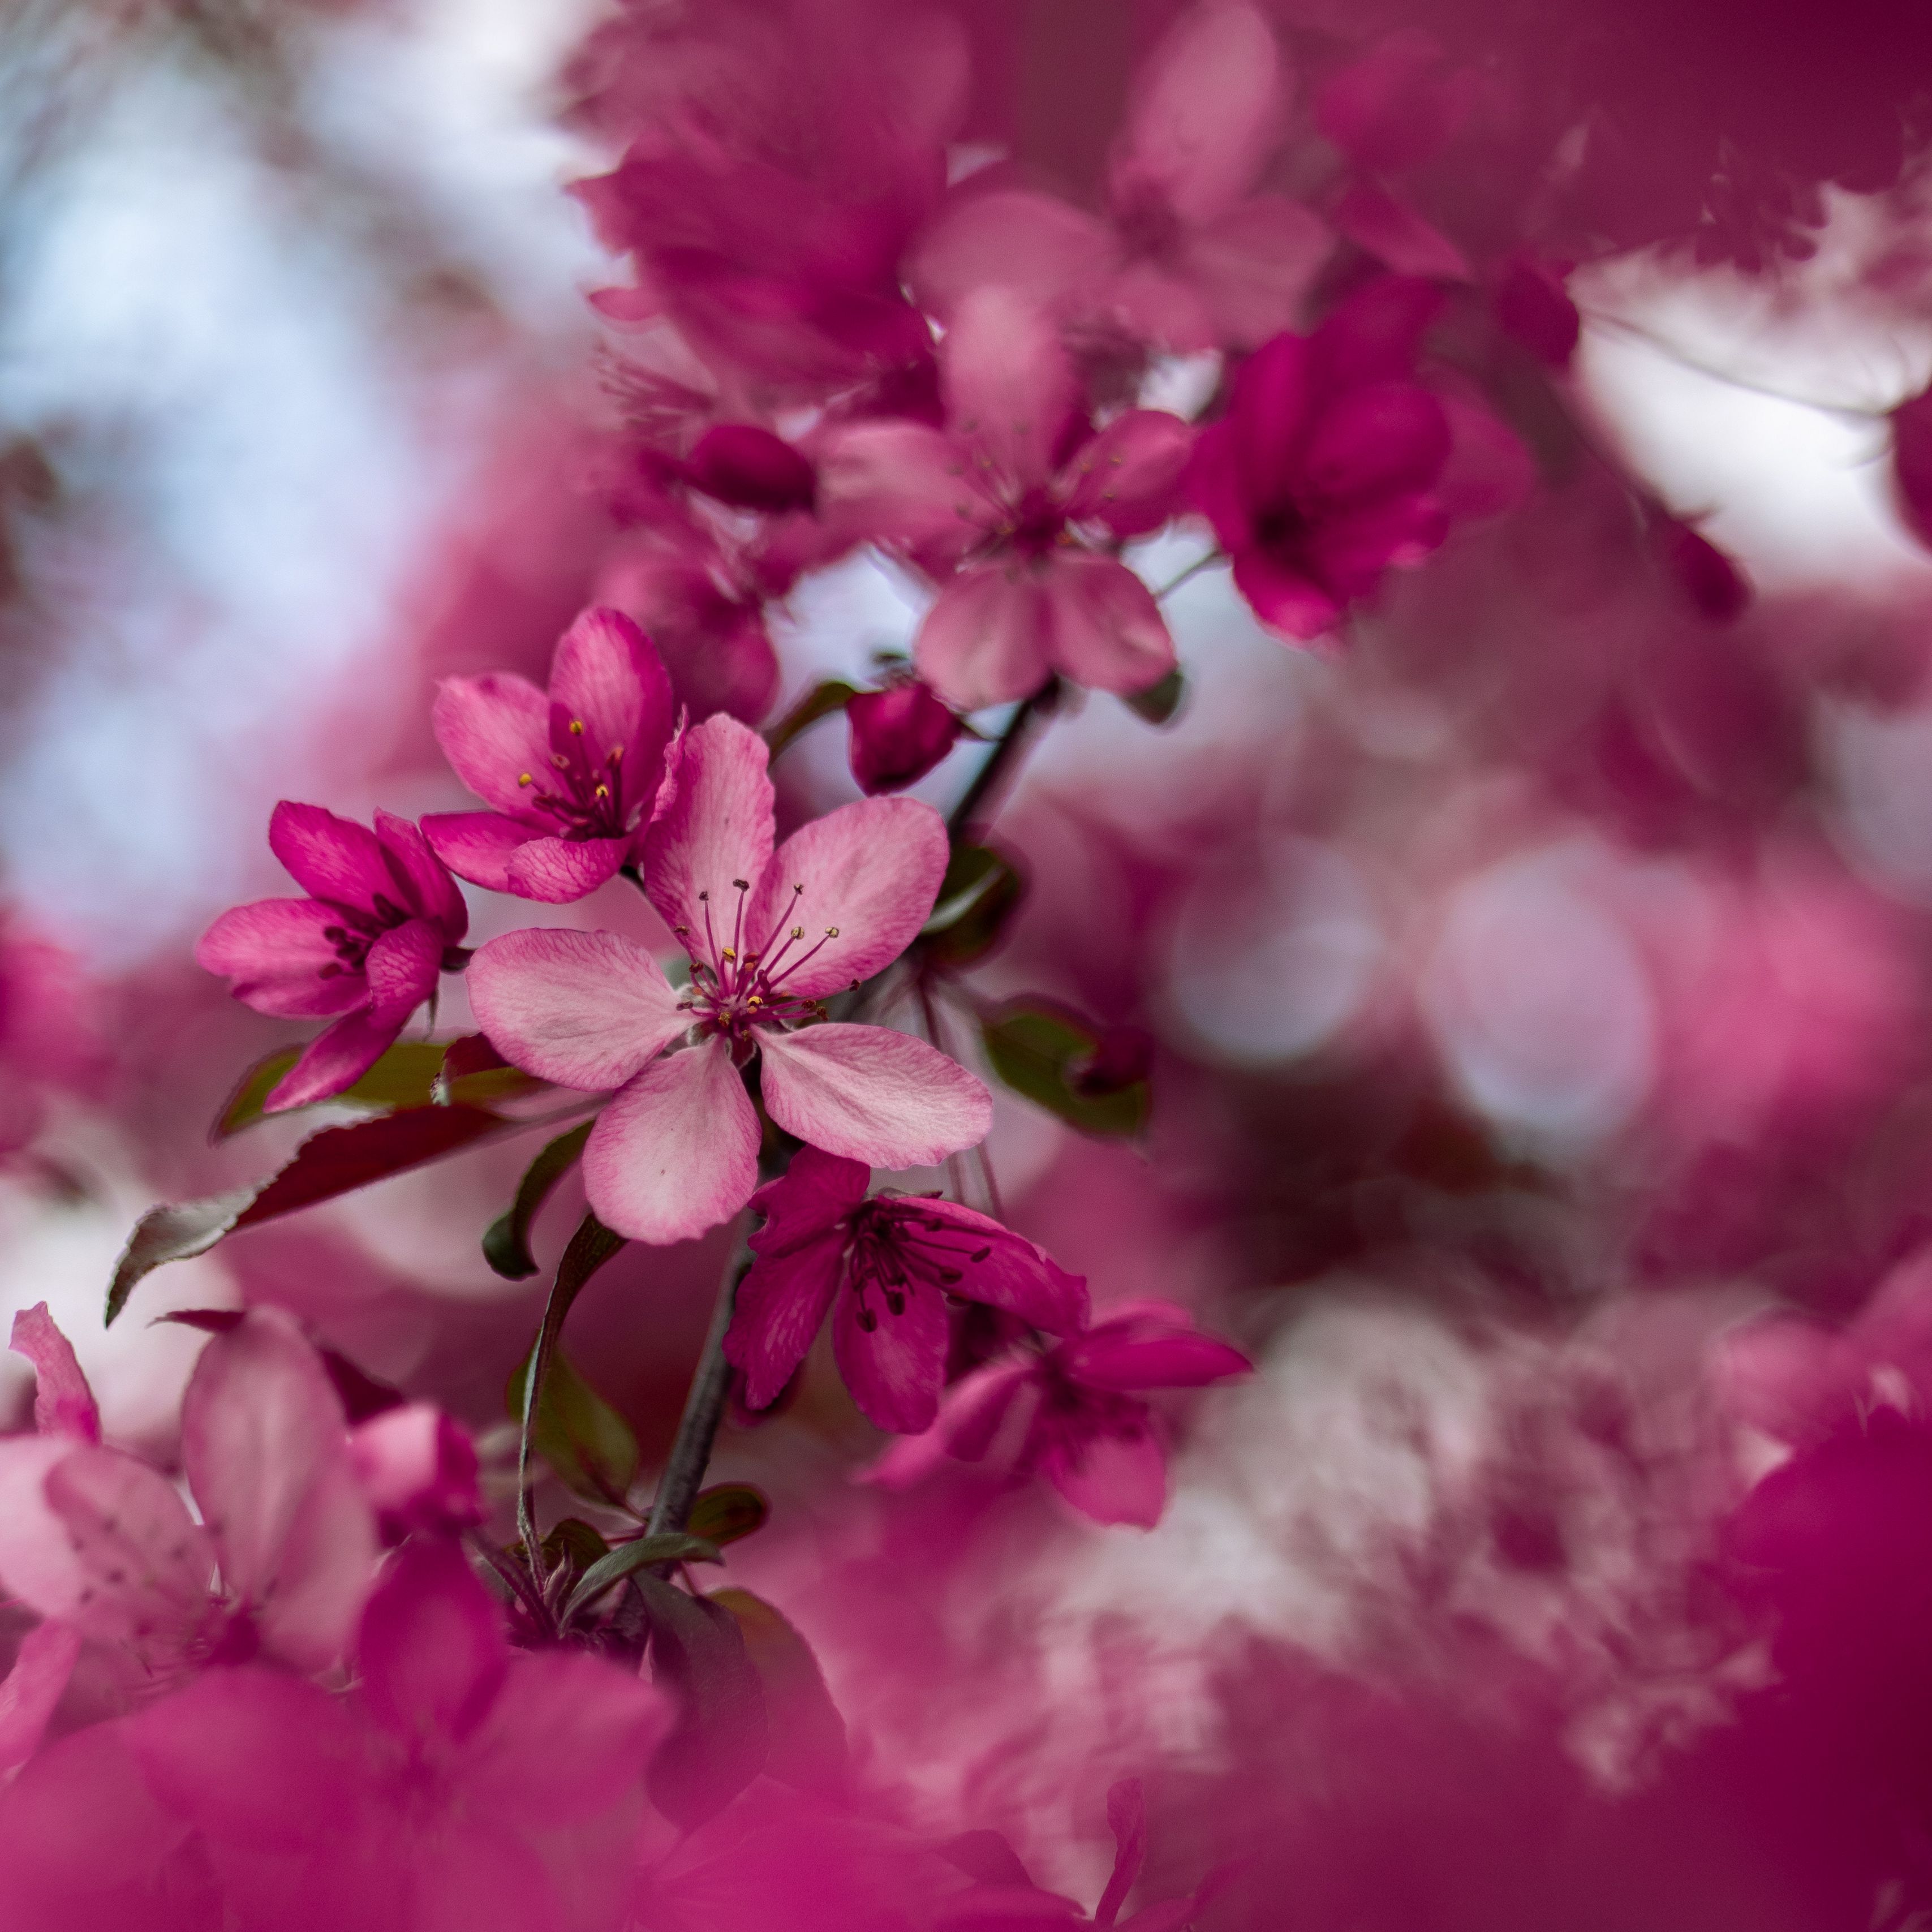 Download wallpaper 3415x3415 sakura, flowers, pink, bloom, branch ipad pro 12.9 retina for parallax HD background